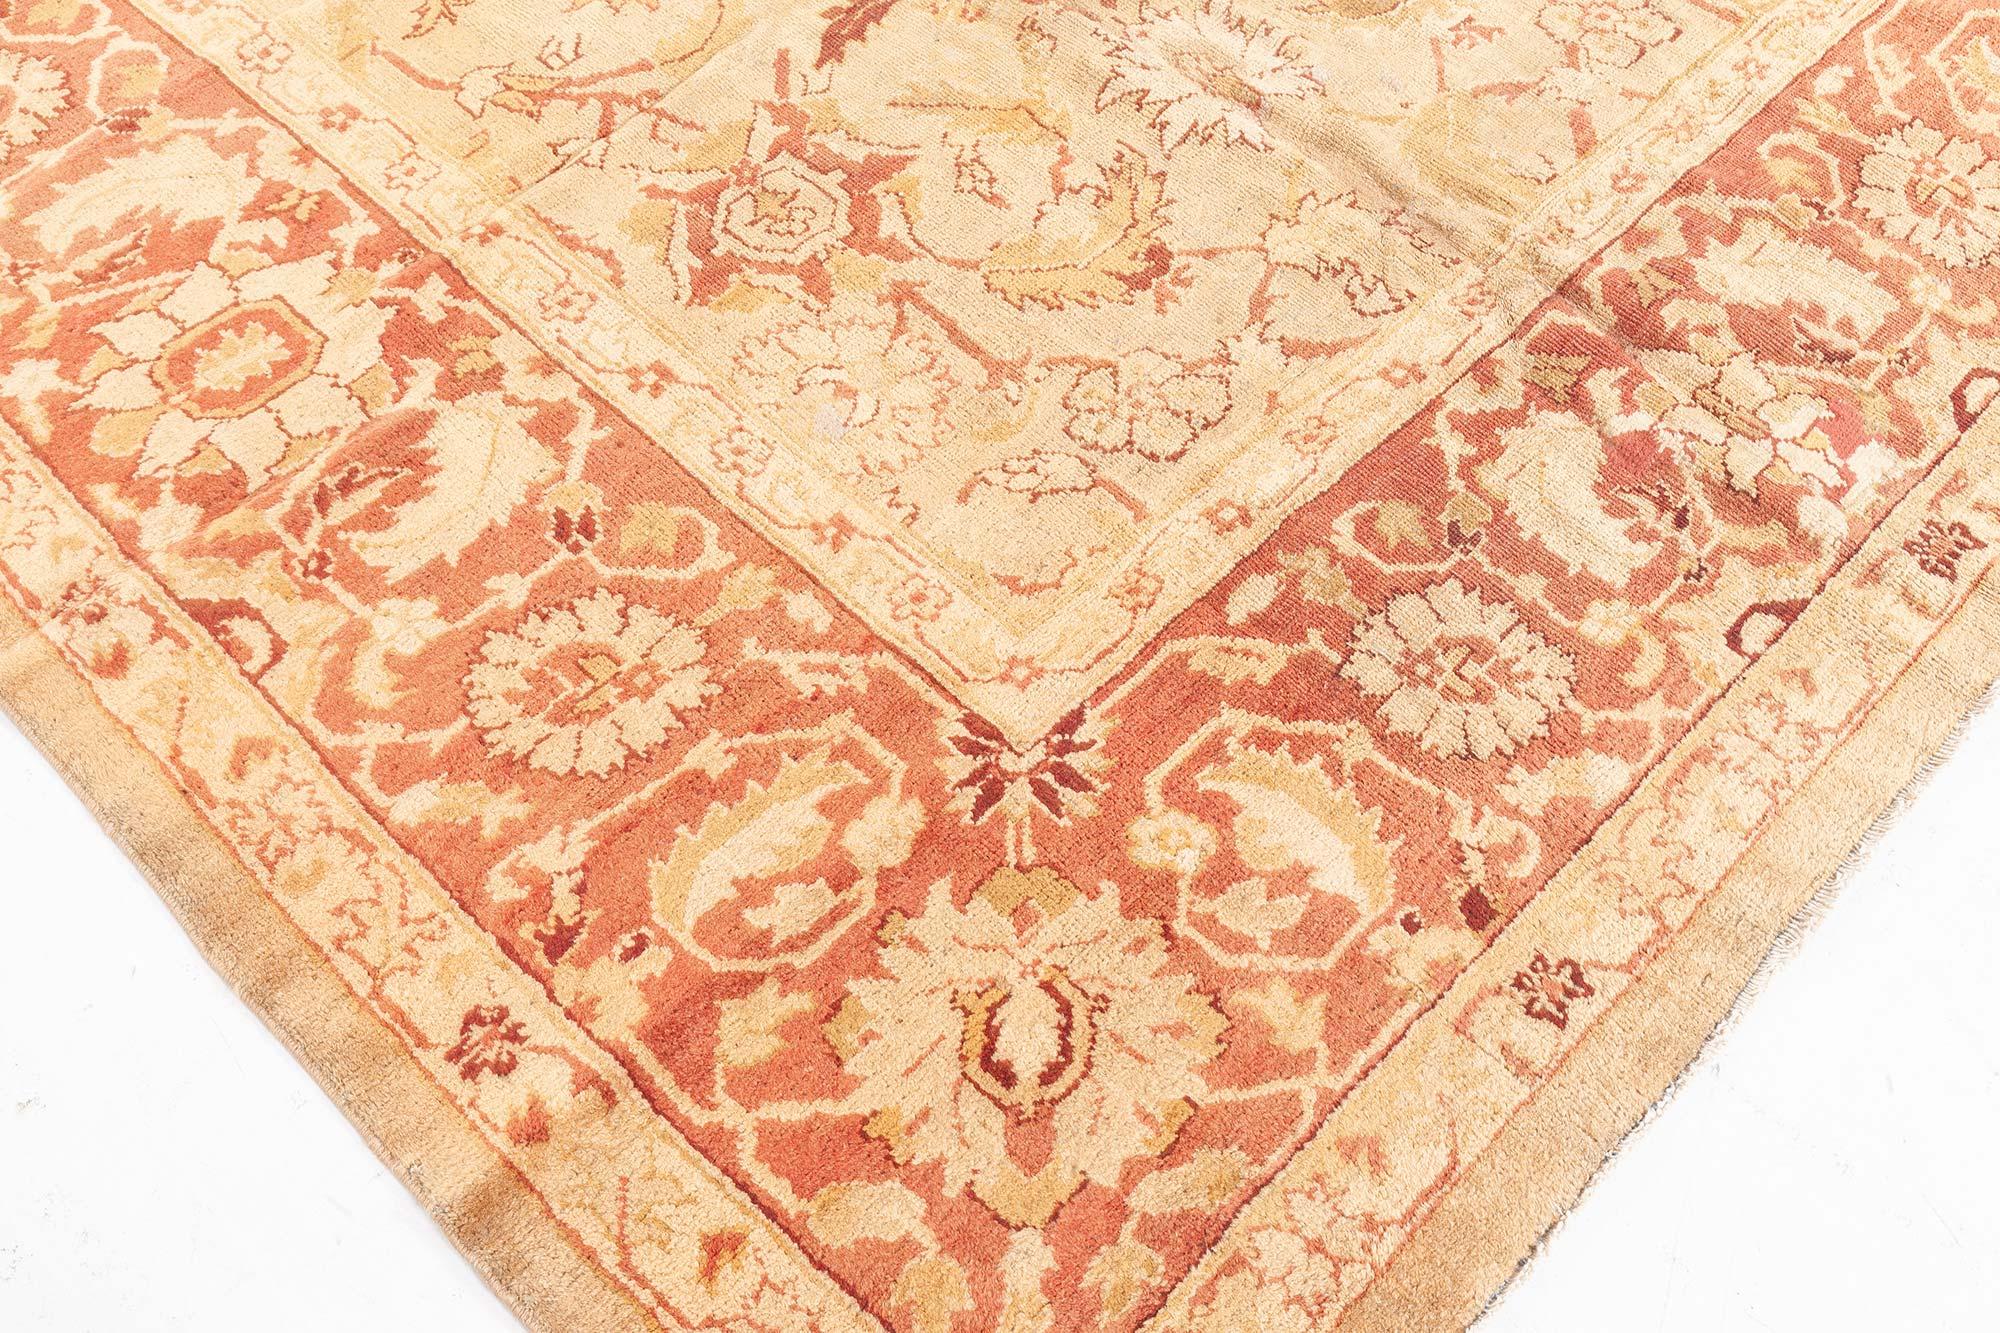 20th Century Vintage Botanic Indian Amritsar Carpet For Sale